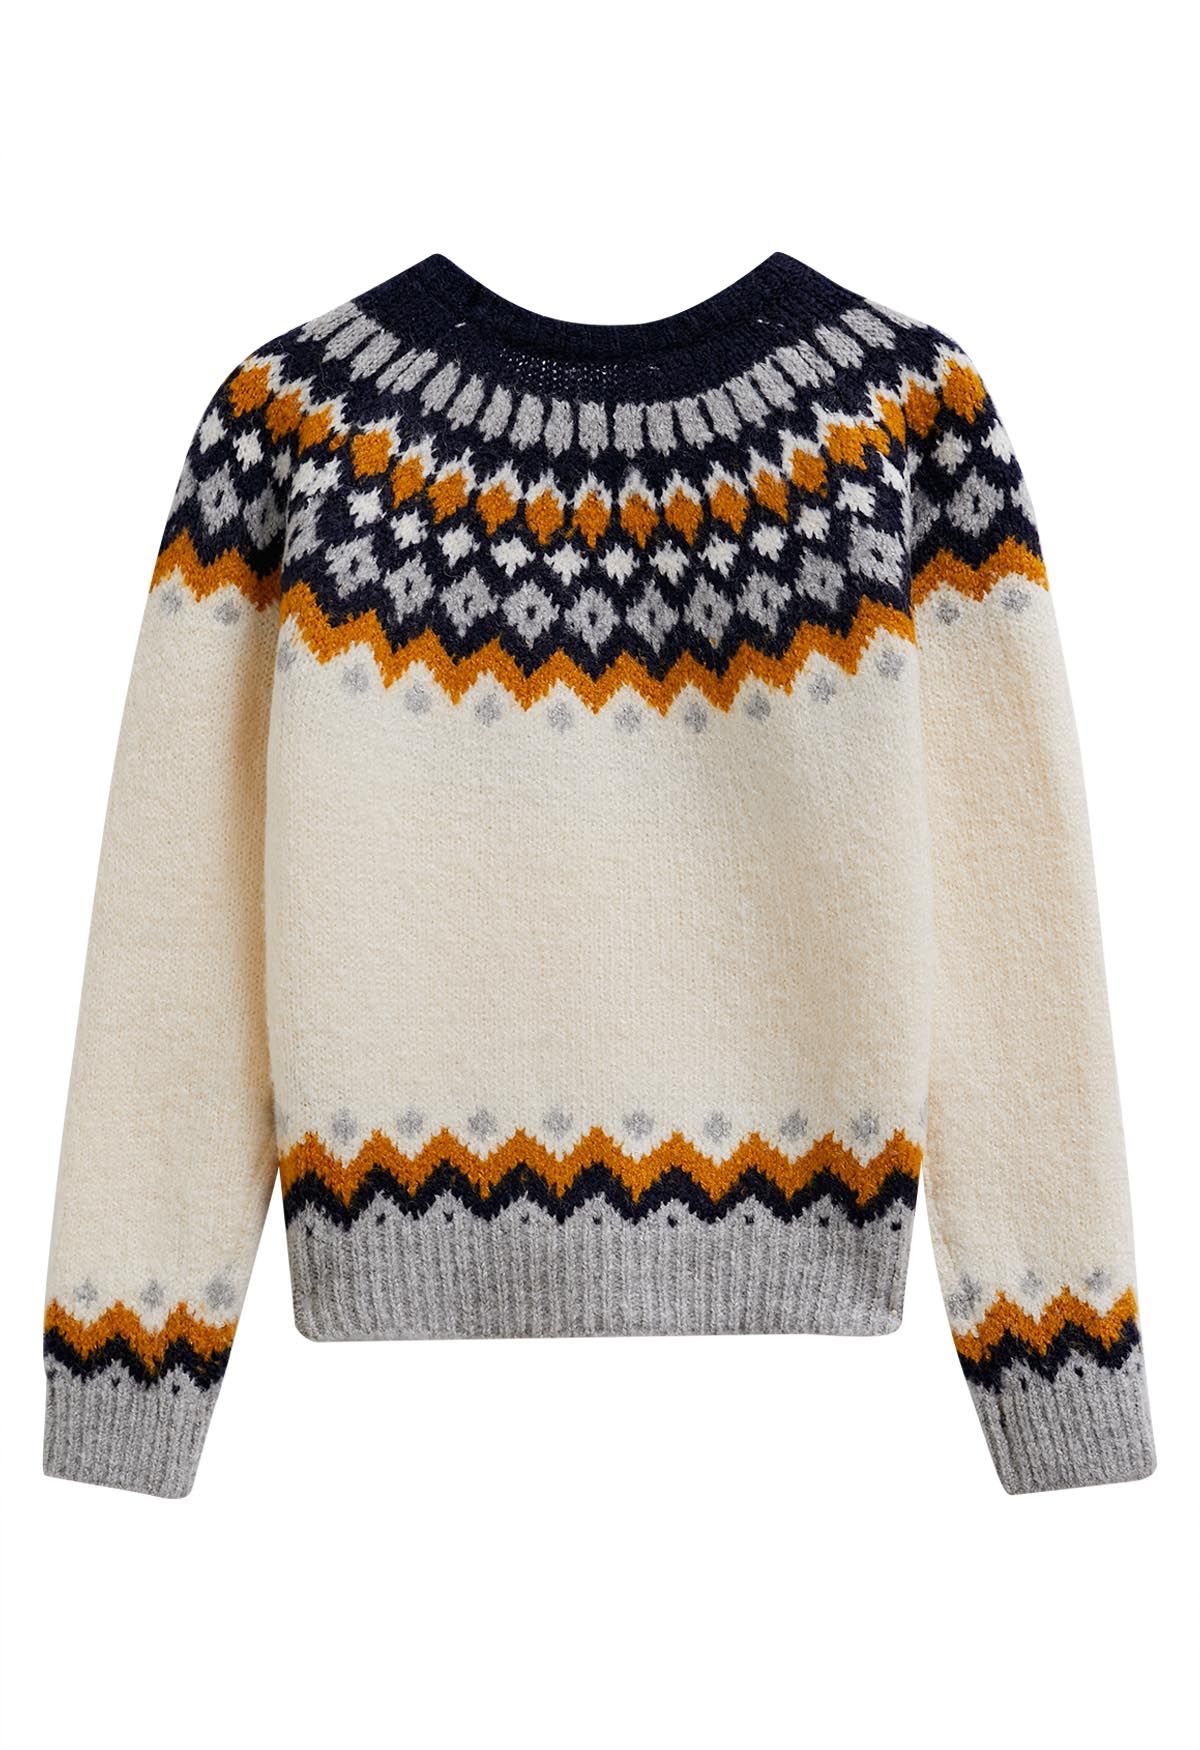 Fair Isle Style Pattern Knit Sweater in Cream